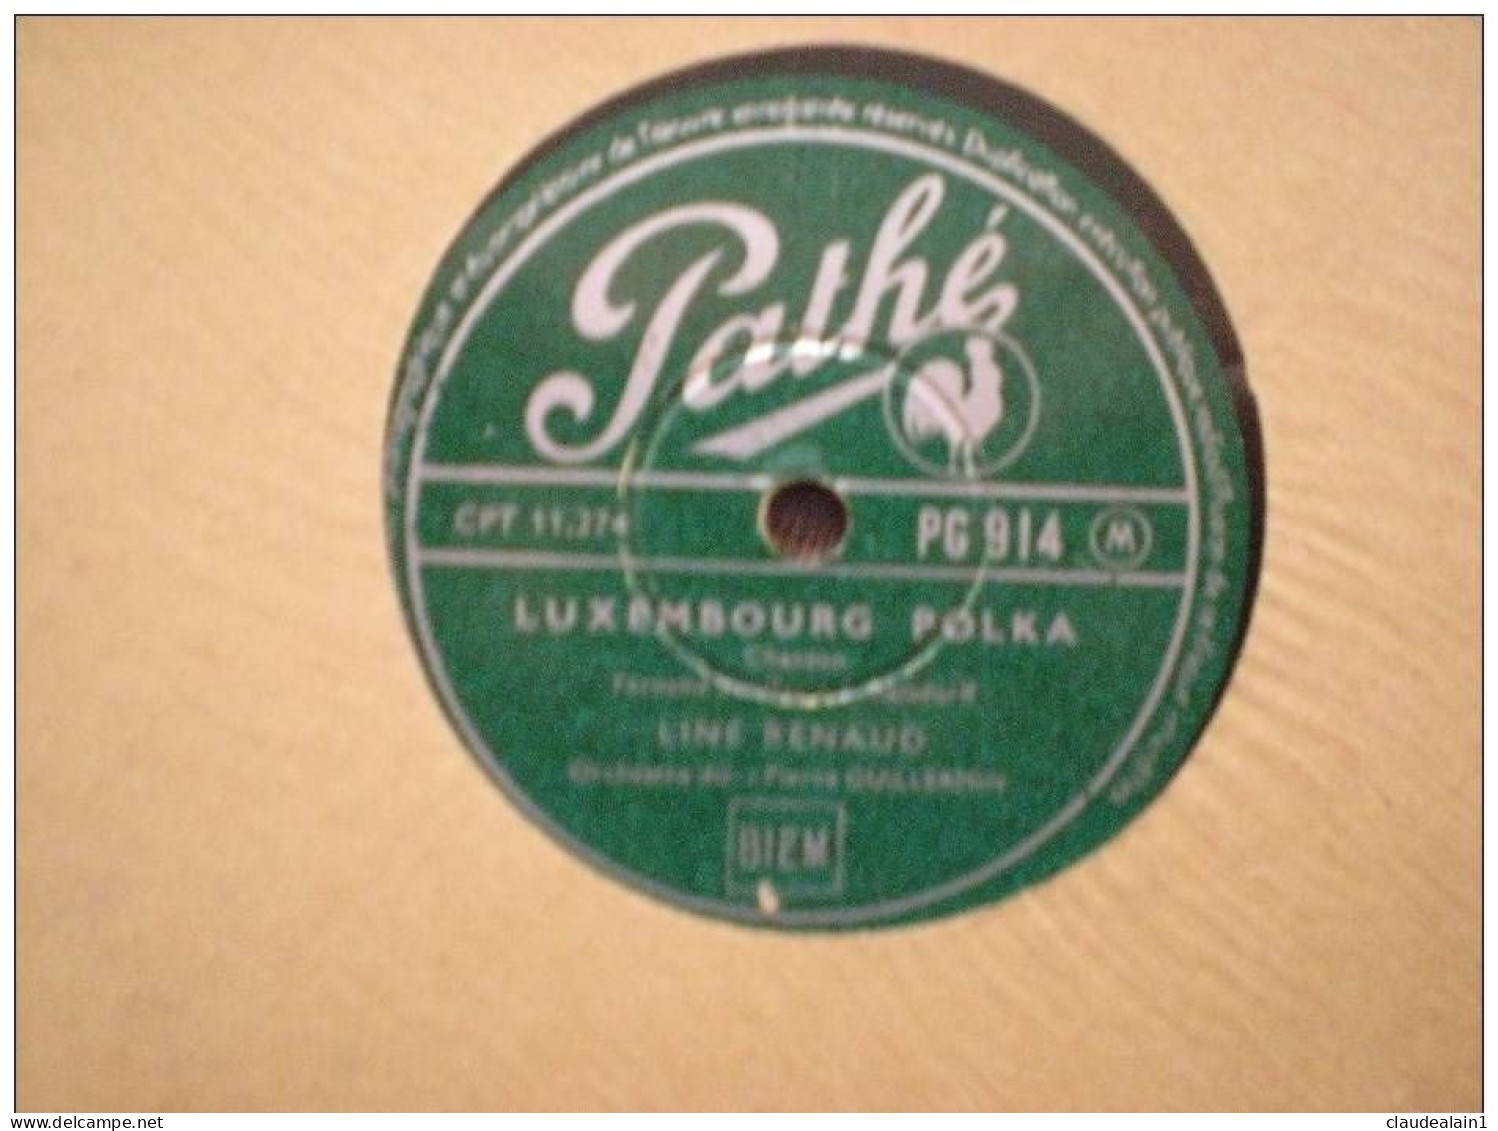 DISQUE PATHE VINYLE 78T - LINE RENAUD - LUXEMBOURG POLKA - PROTEGE-MOI - 78 Rpm - Schellackplatten